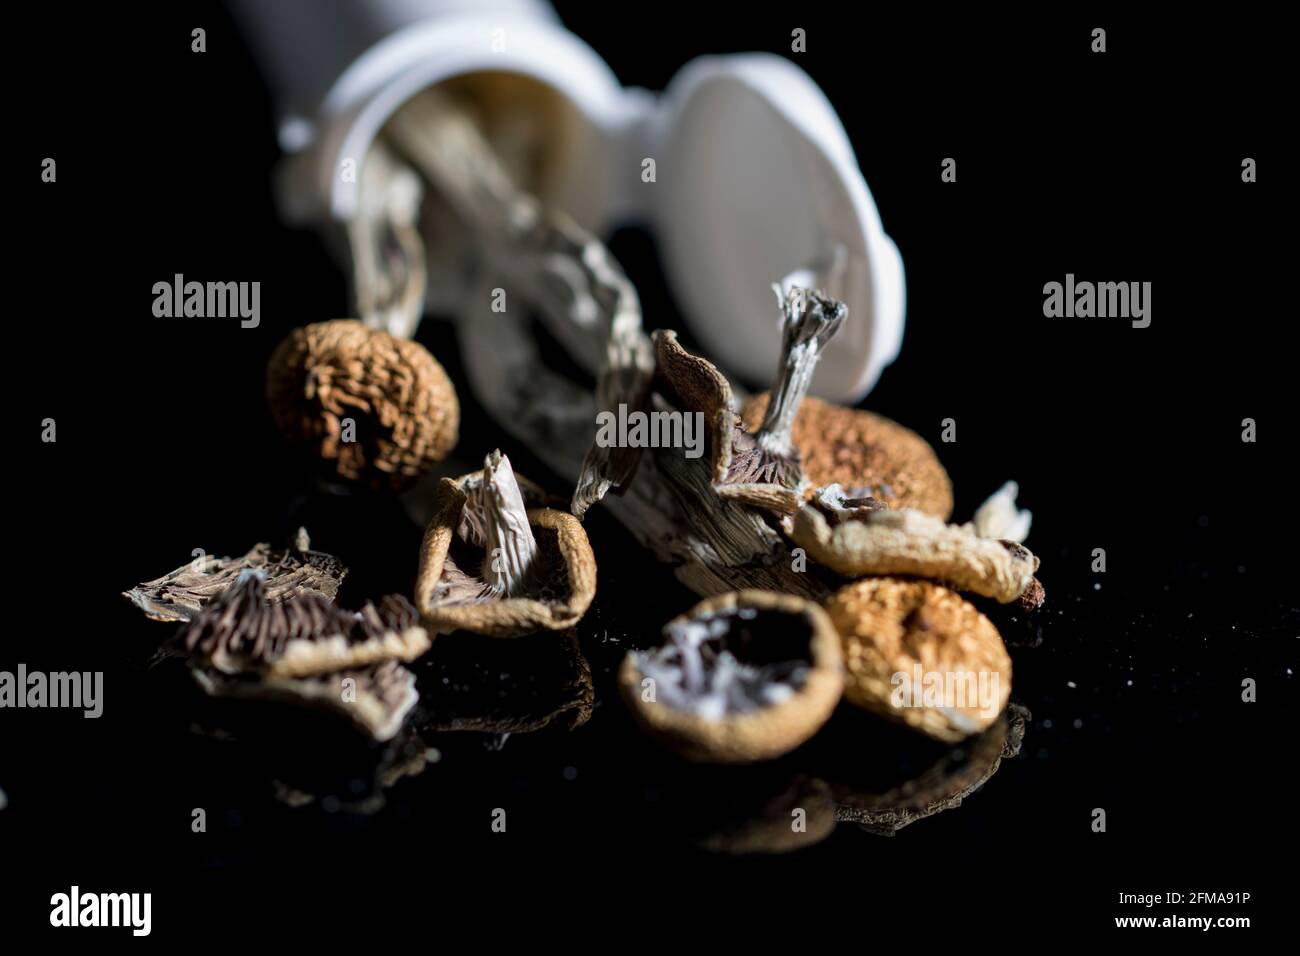 Dried psilocybin mushrooms in medical bottle on black background. Medical entheogens. Stock Photo